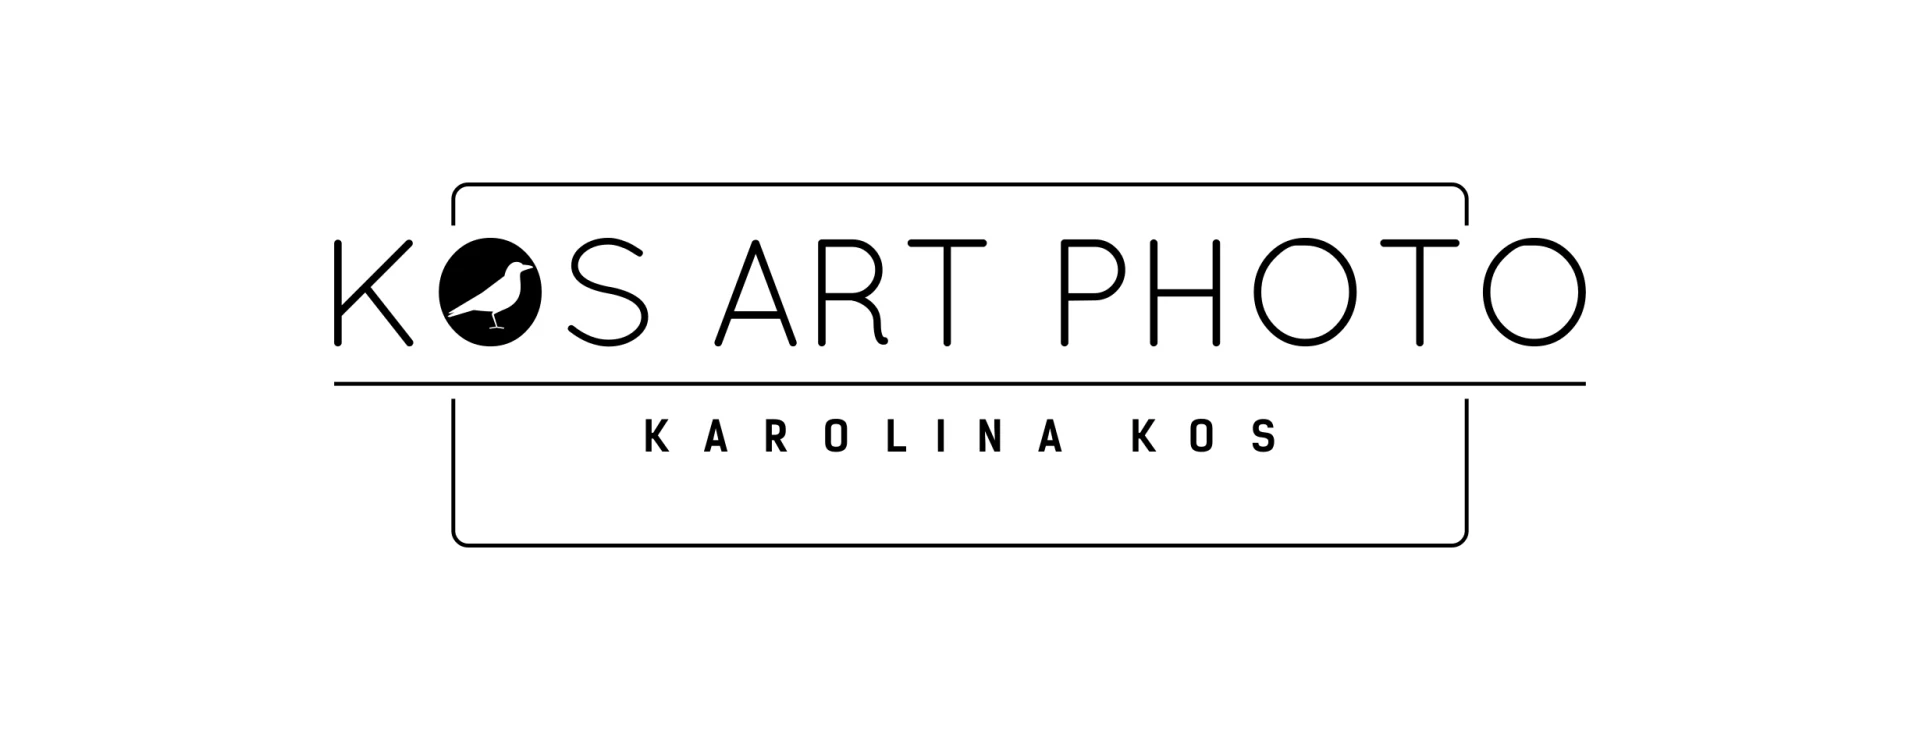 portfolio zdjecia znany fotograf karolina-kos-kosartphoto